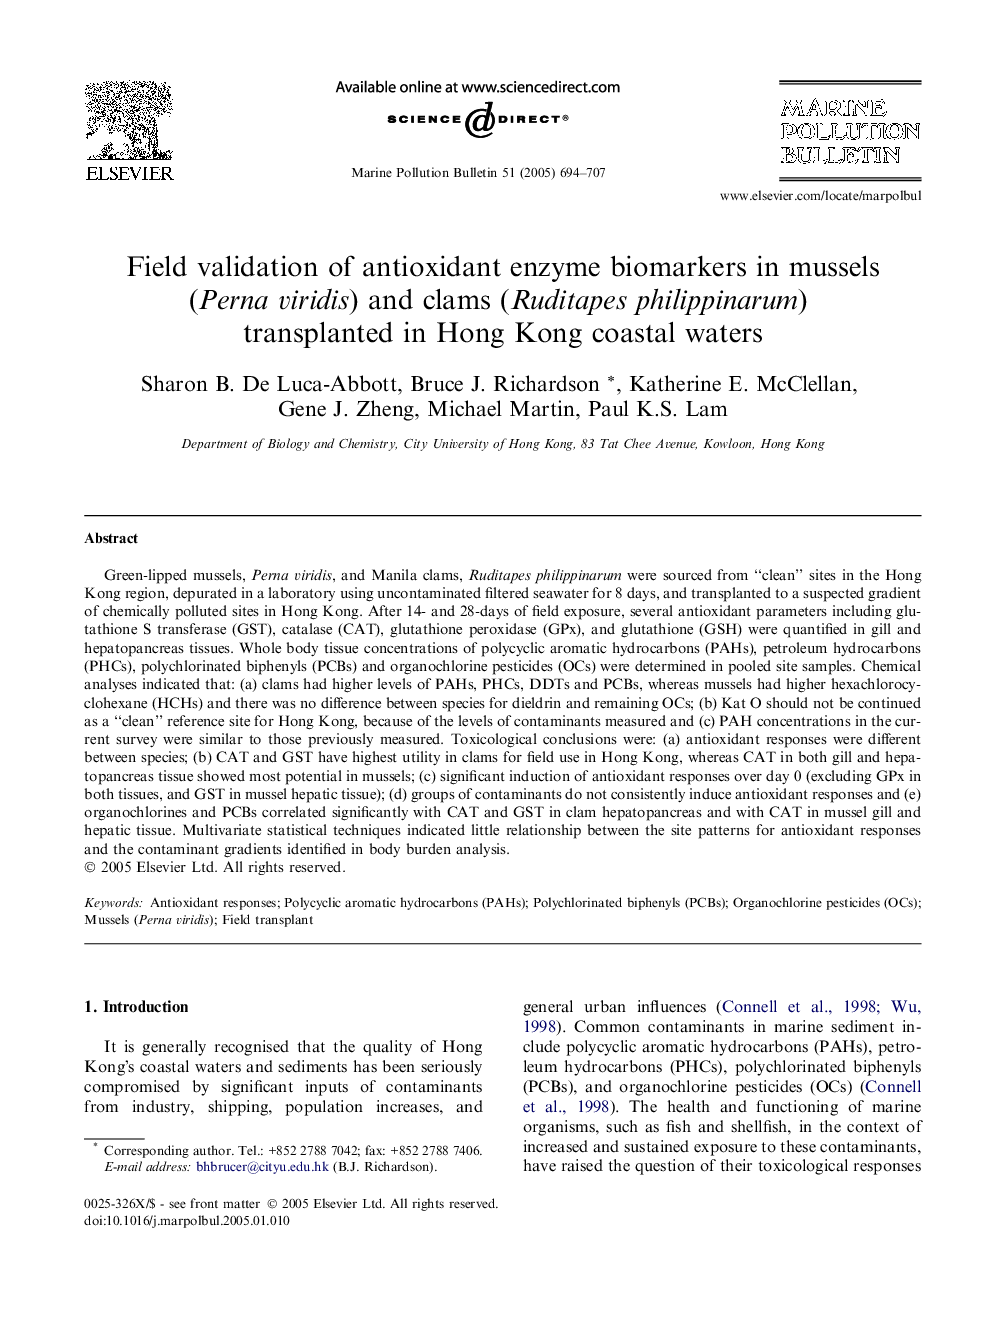 Field validation of antioxidant enzyme biomarkers in mussels (Perna viridis) and clams (Ruditapes philippinarum) transplanted in Hong Kong coastal waters